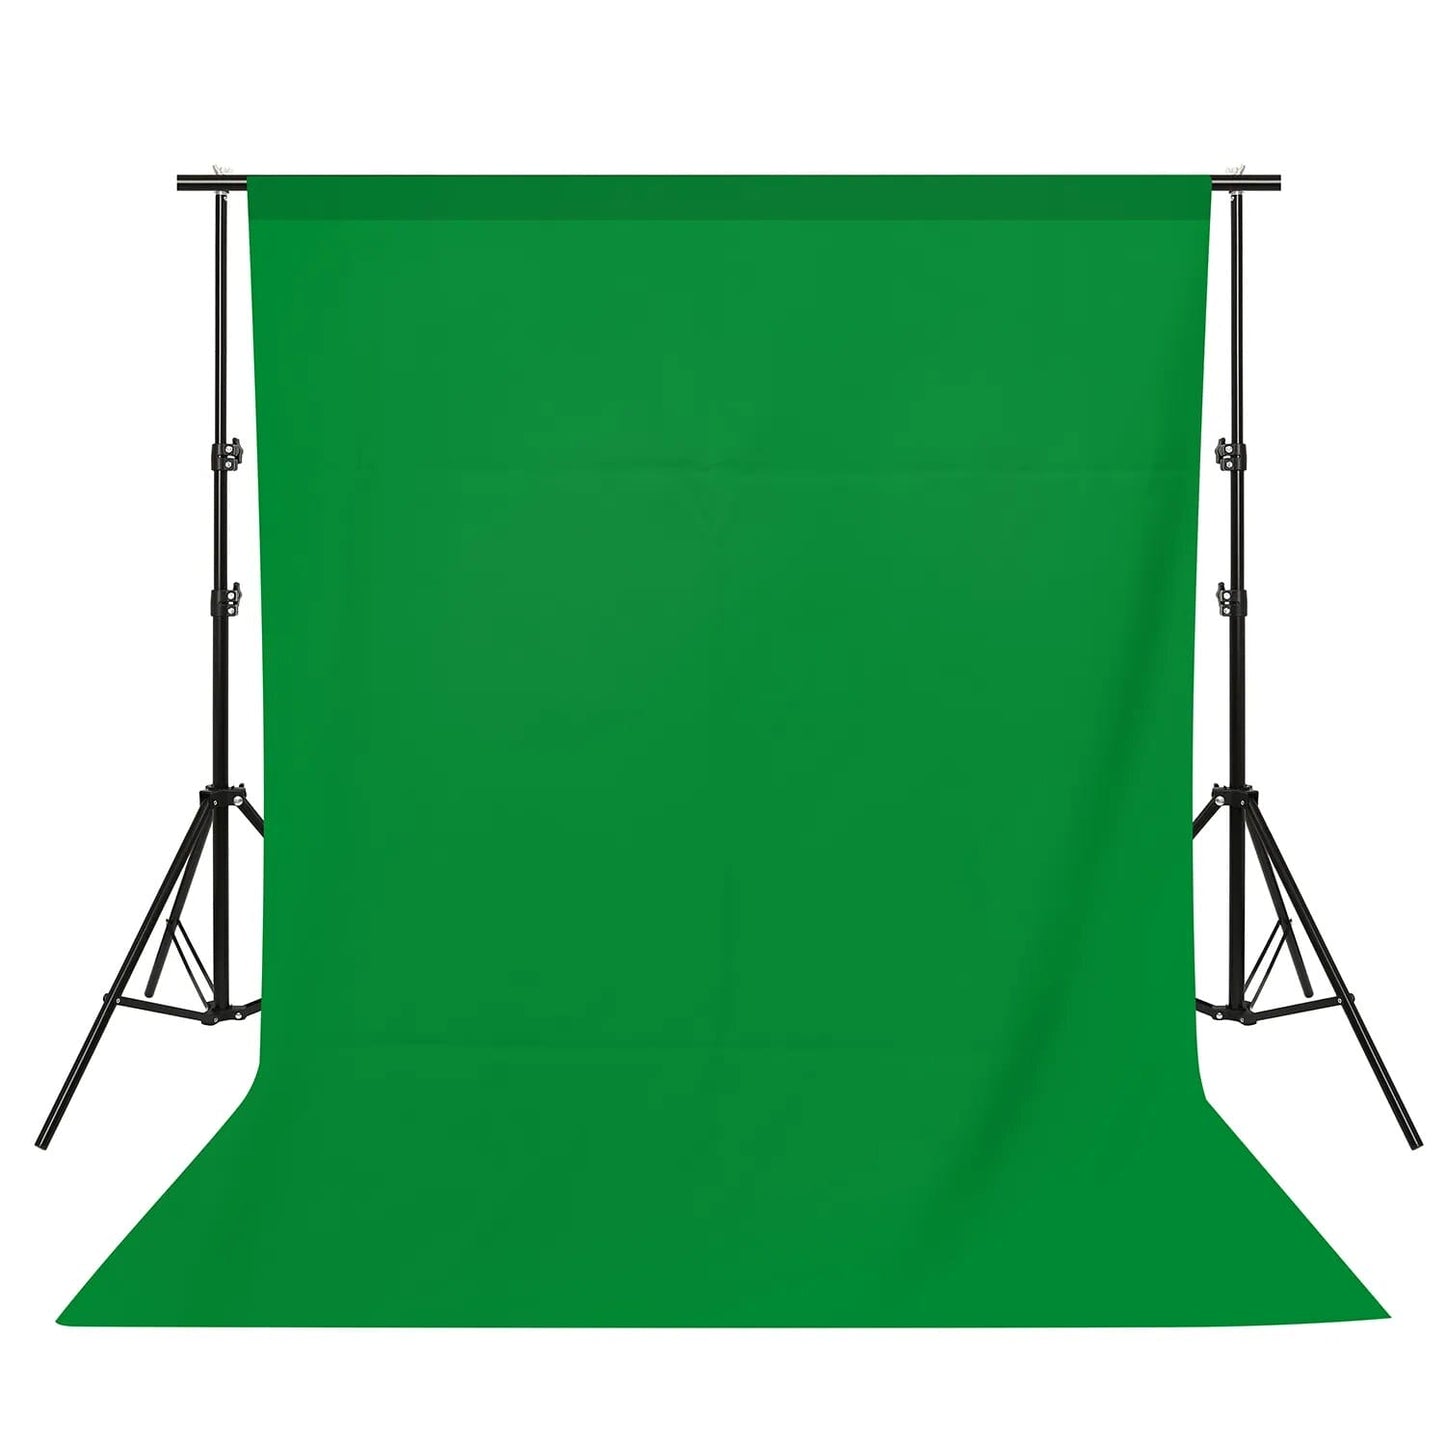 Hridz Background Backdrops White Black Green Muslin For Photography Studio